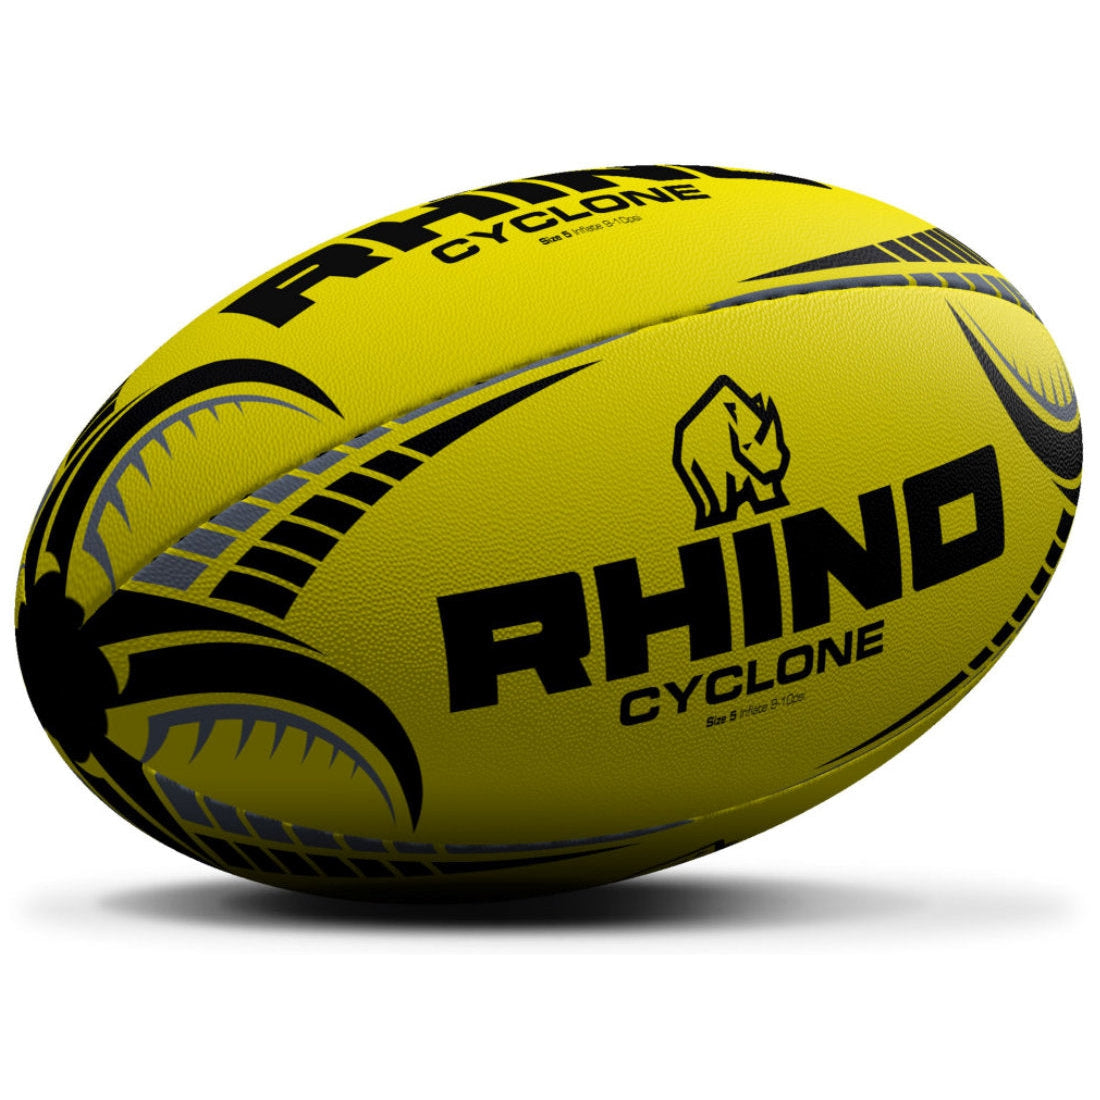 Rhino Rugby Ball Cyclone Yellow - Size 5